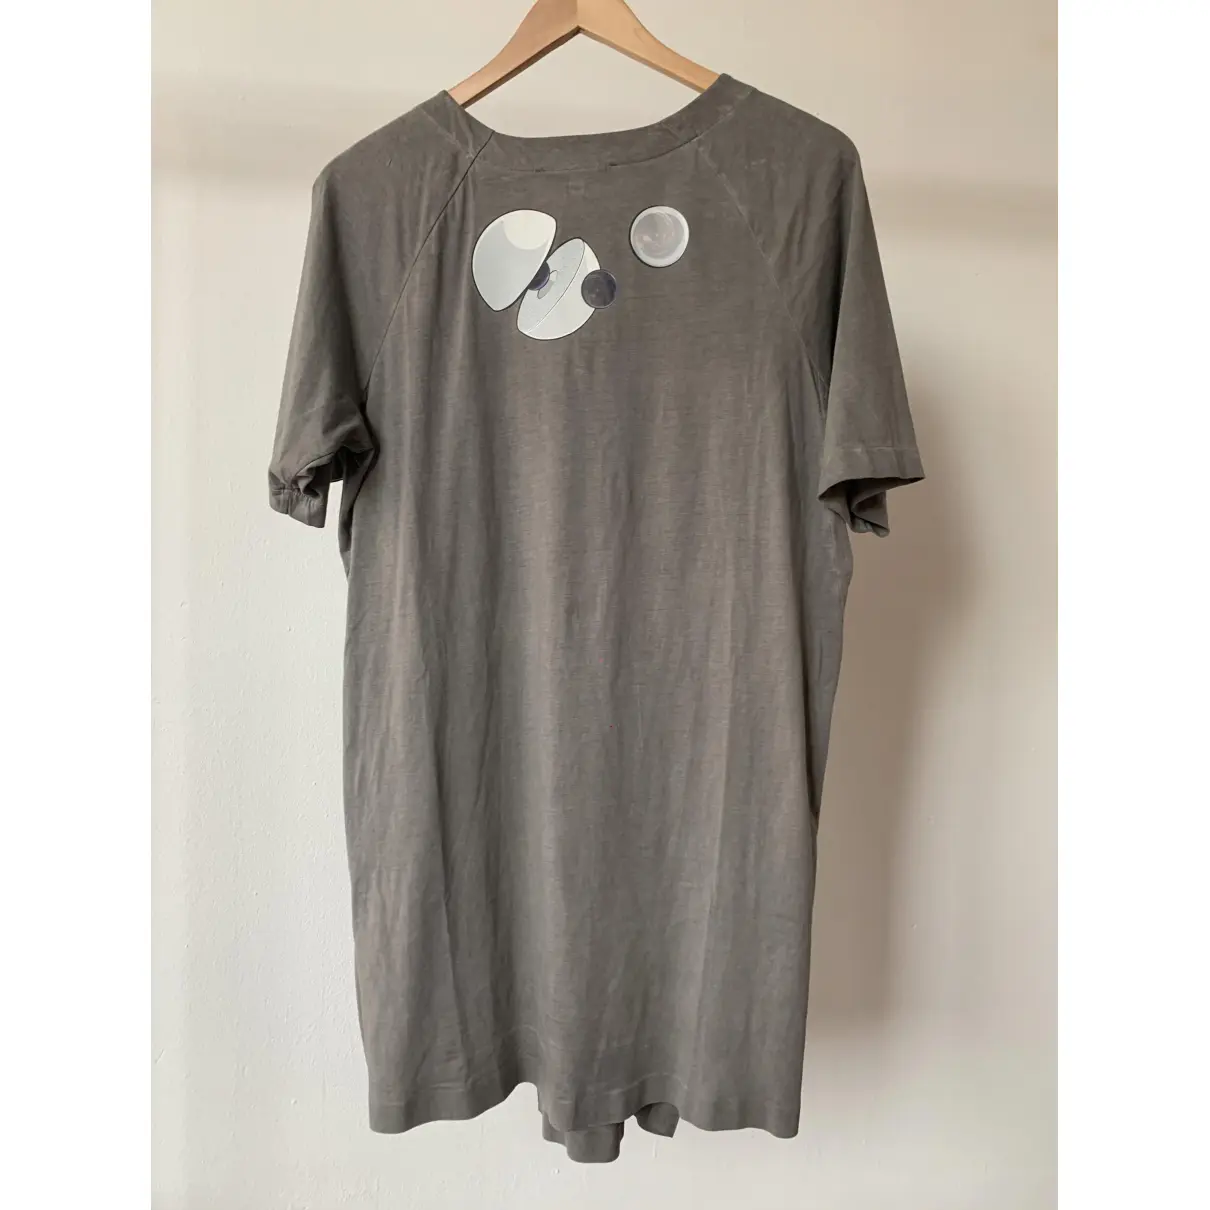 Buy Y-3 by Yohji Yamamoto T-shirt online